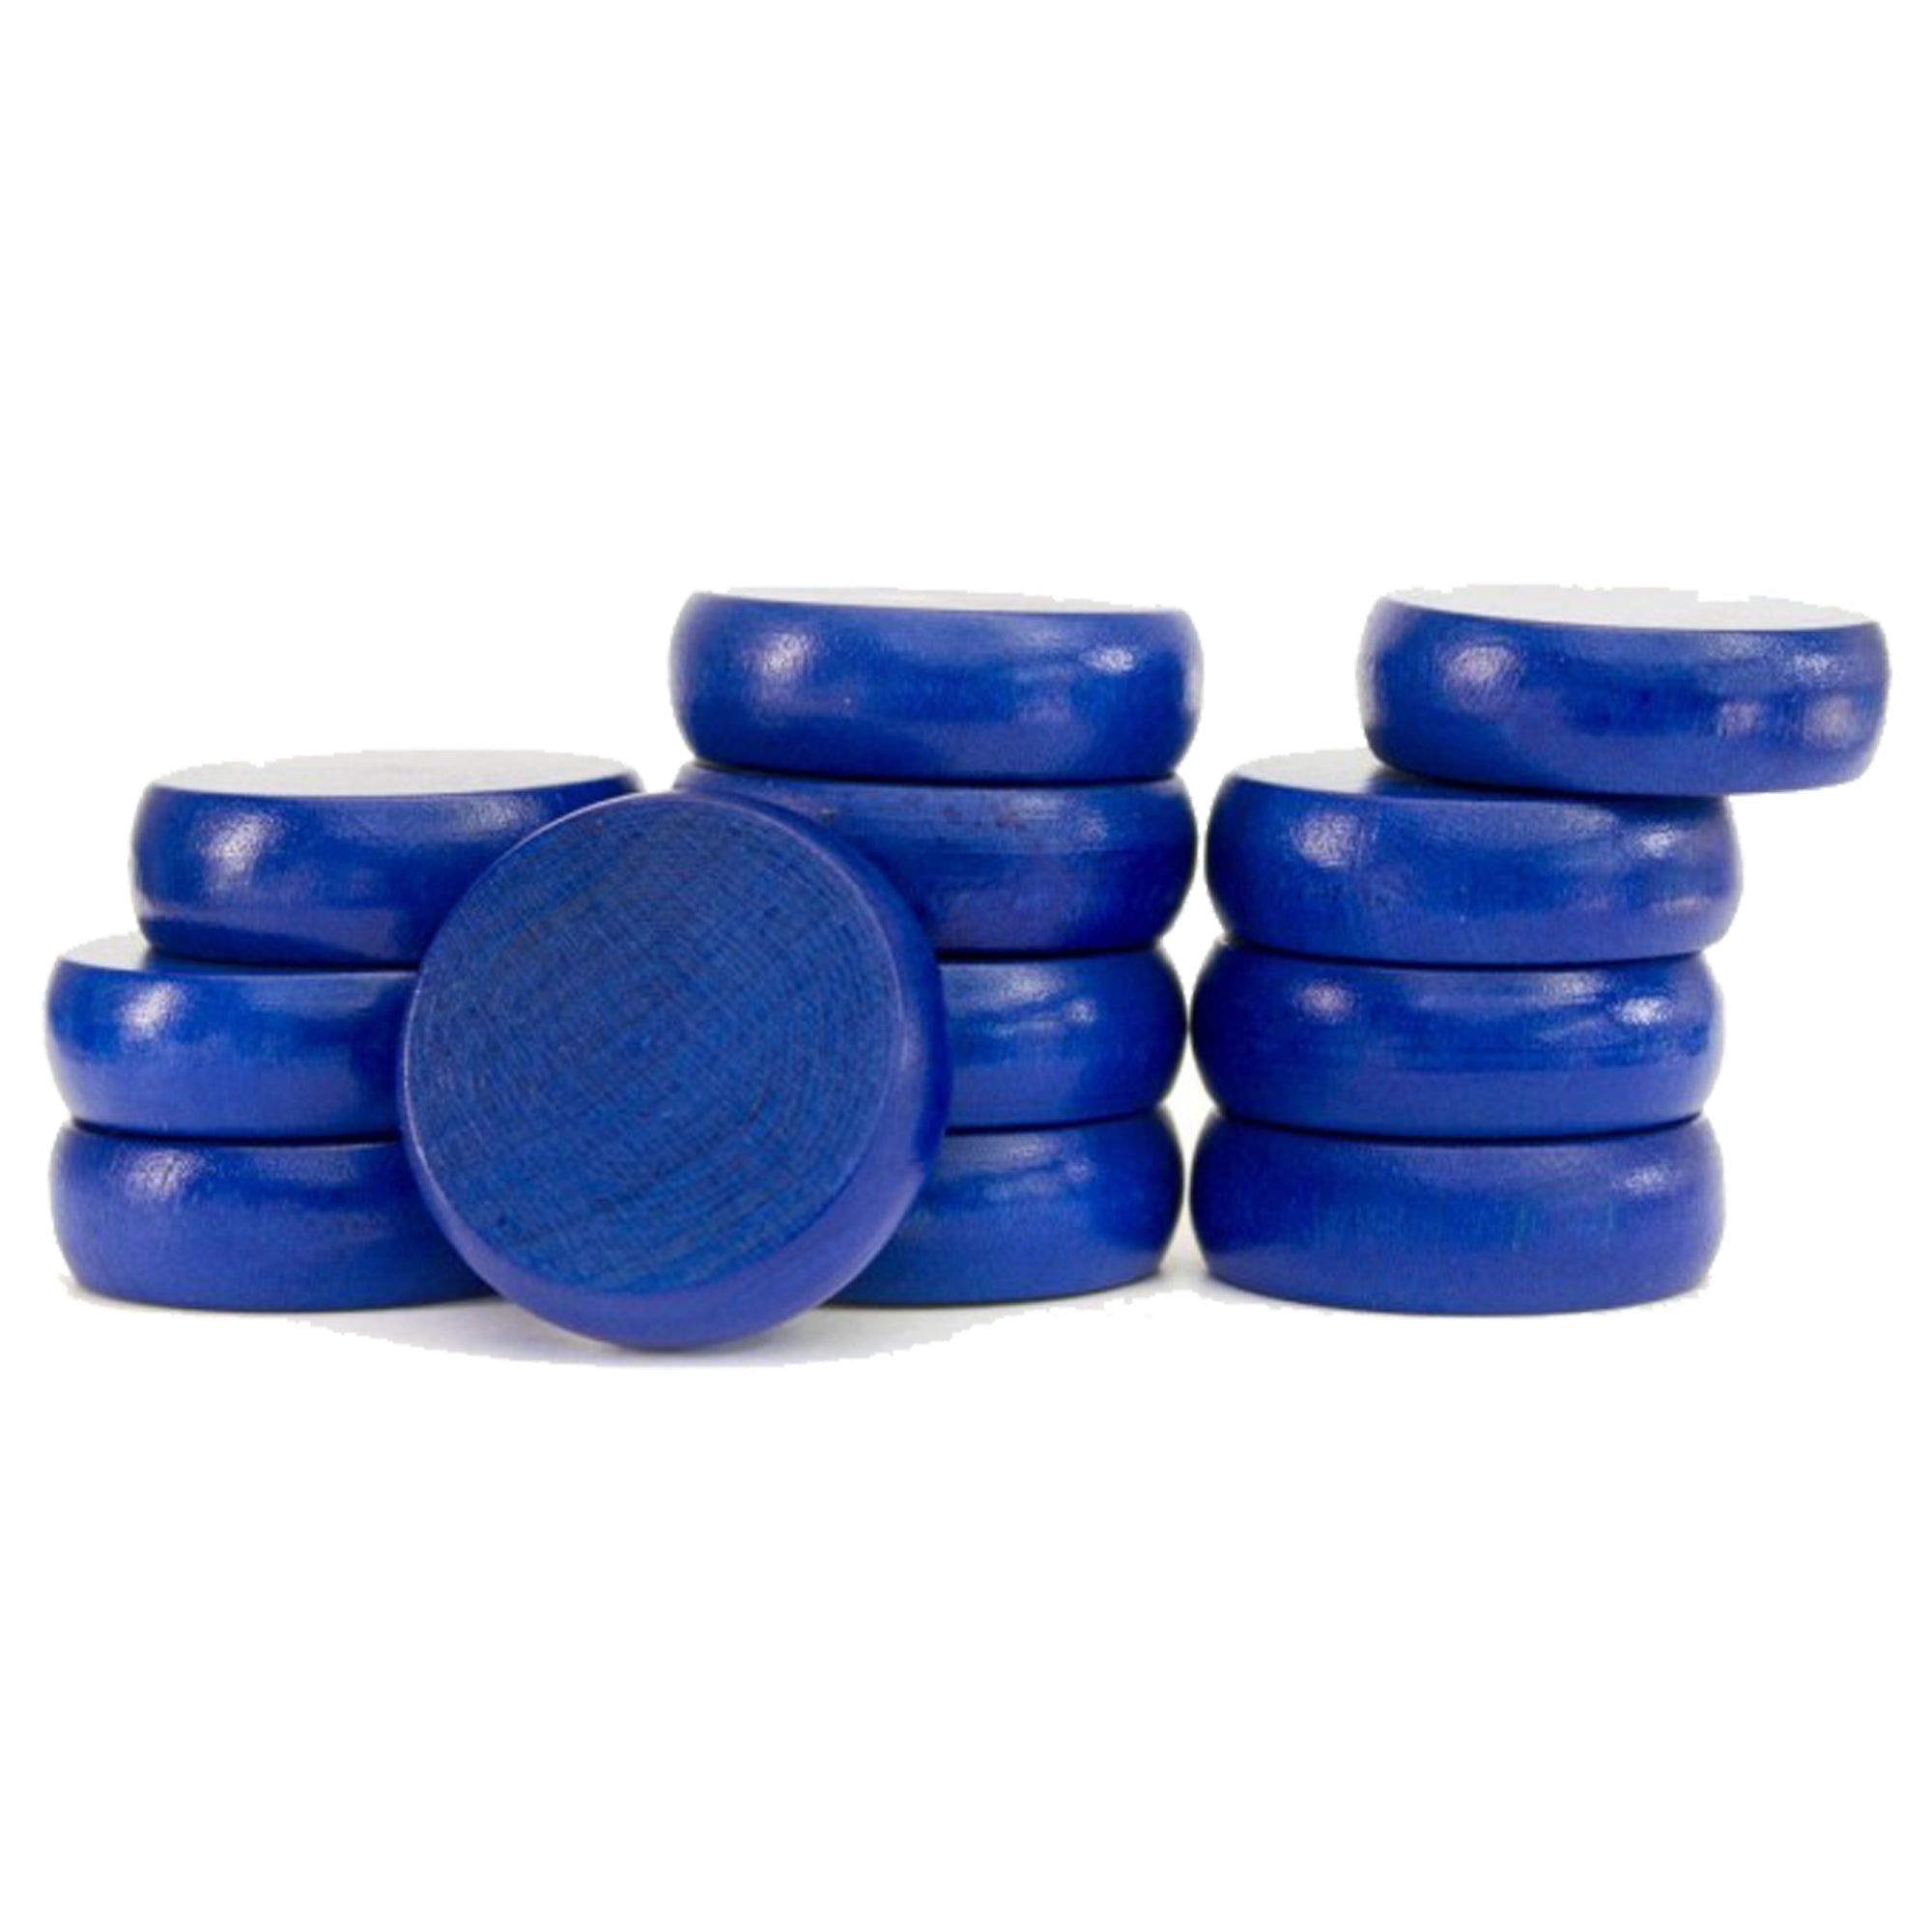 Crokinole Tournament Discs - Set of 13 Blue Discs - Official Size 1-1/4" - Includes Bag - Carrom Alternative